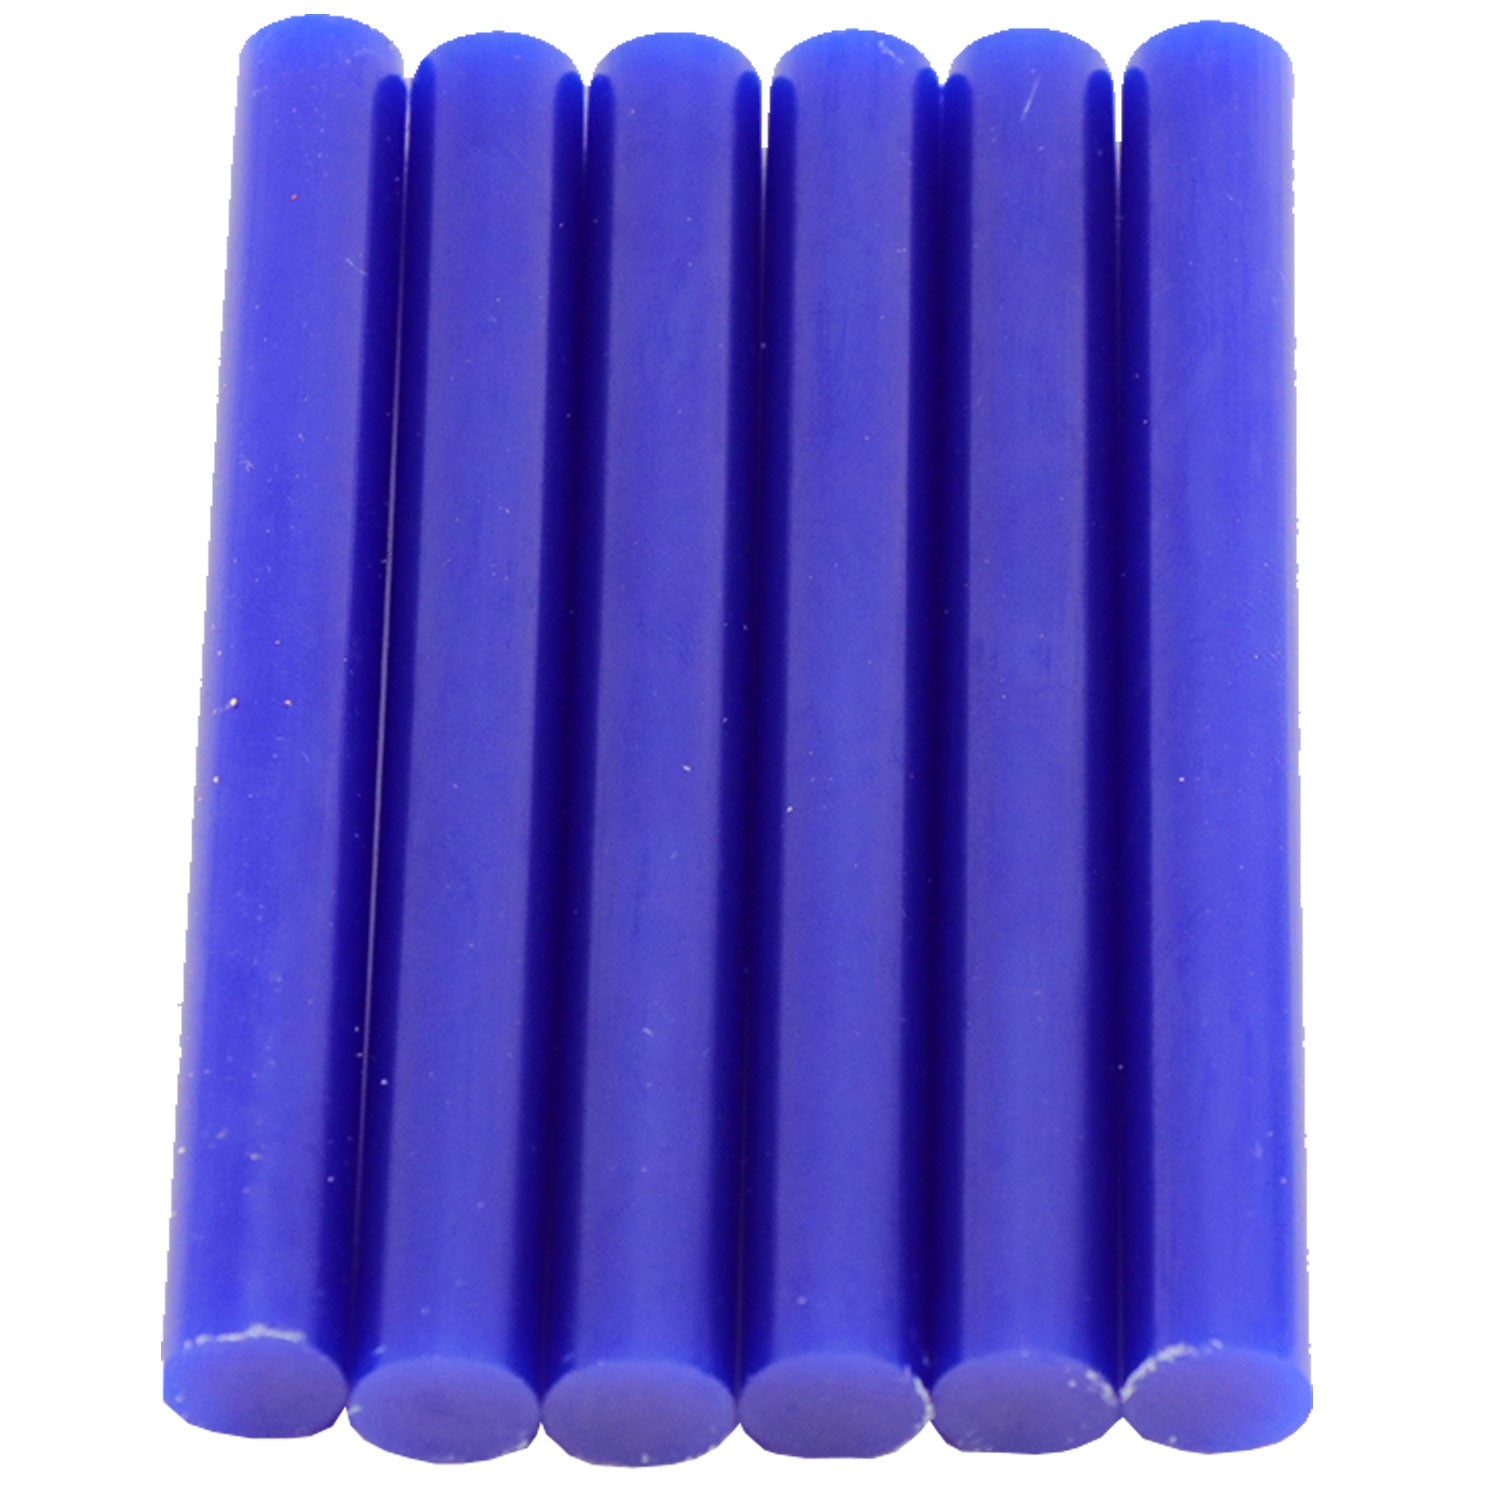 Blue Hot Glue Sticks Full Size - 12 Count | Surebonder